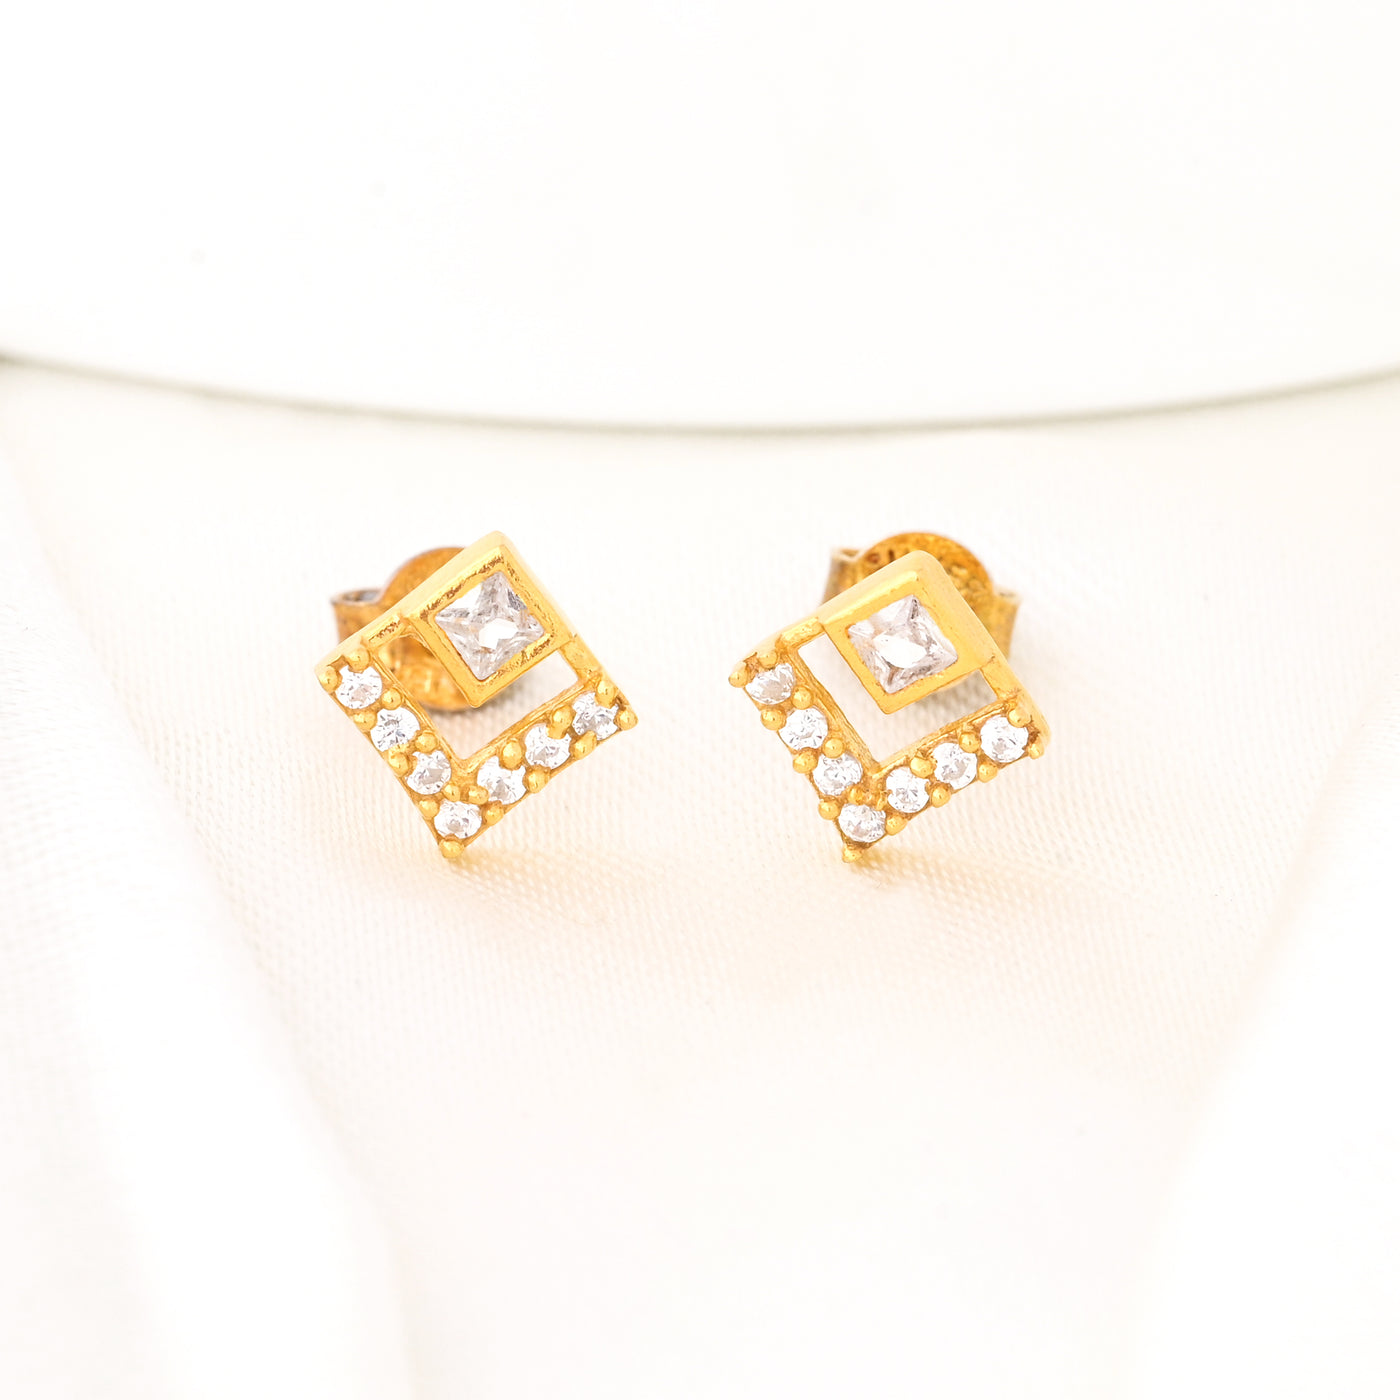 14K Gold Plated Diamond Square Earrings